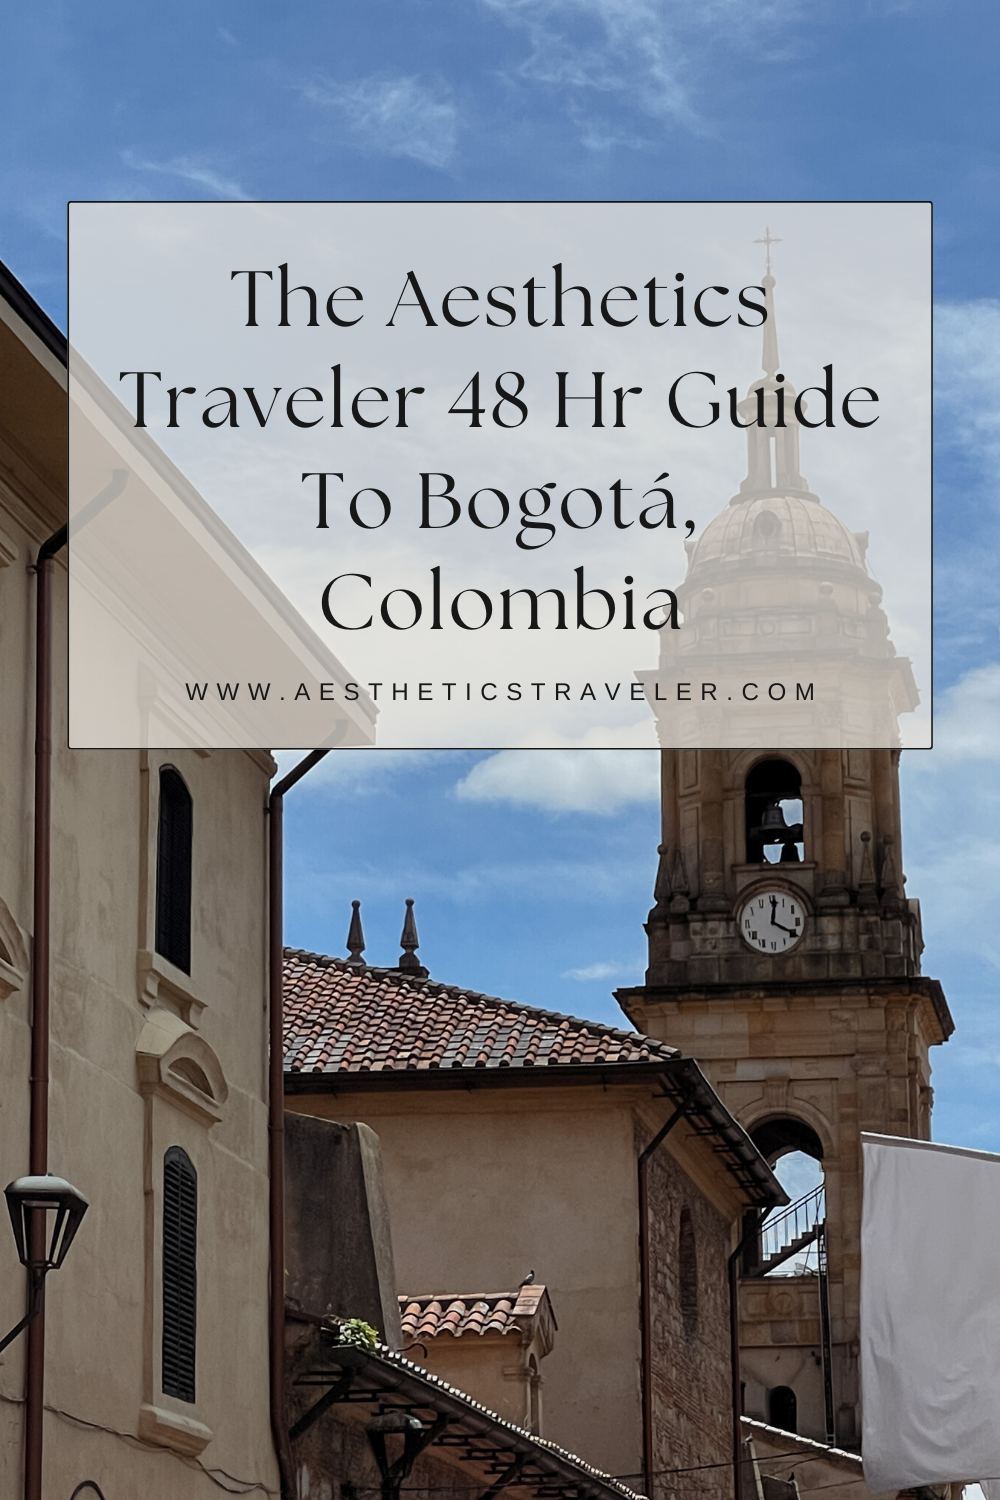 Aesthetics Traveler 48 Hour Guide To Bogotá, Colombia | www.aestheticstraveler.com Luxury Travel & Lifestyle Editorial